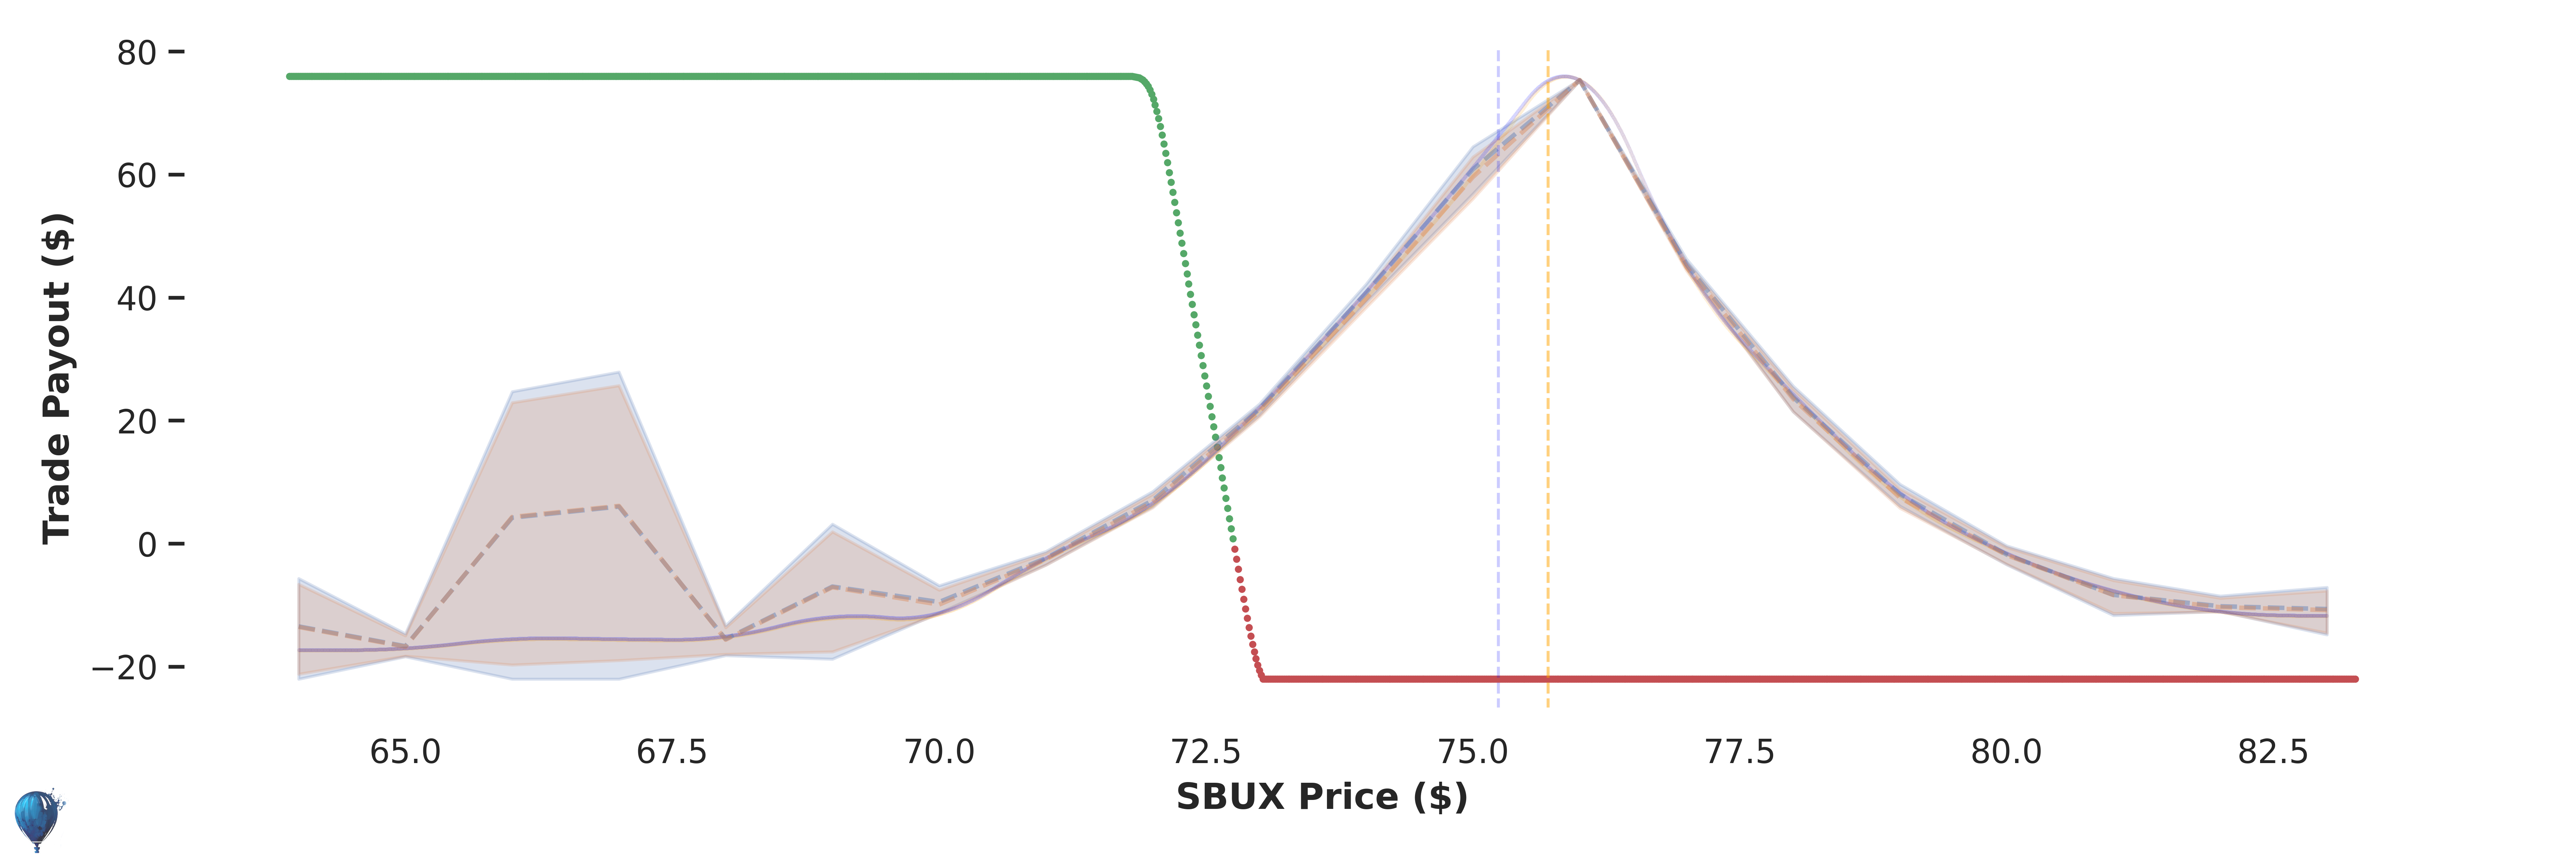 SBUX trade payout at expiration